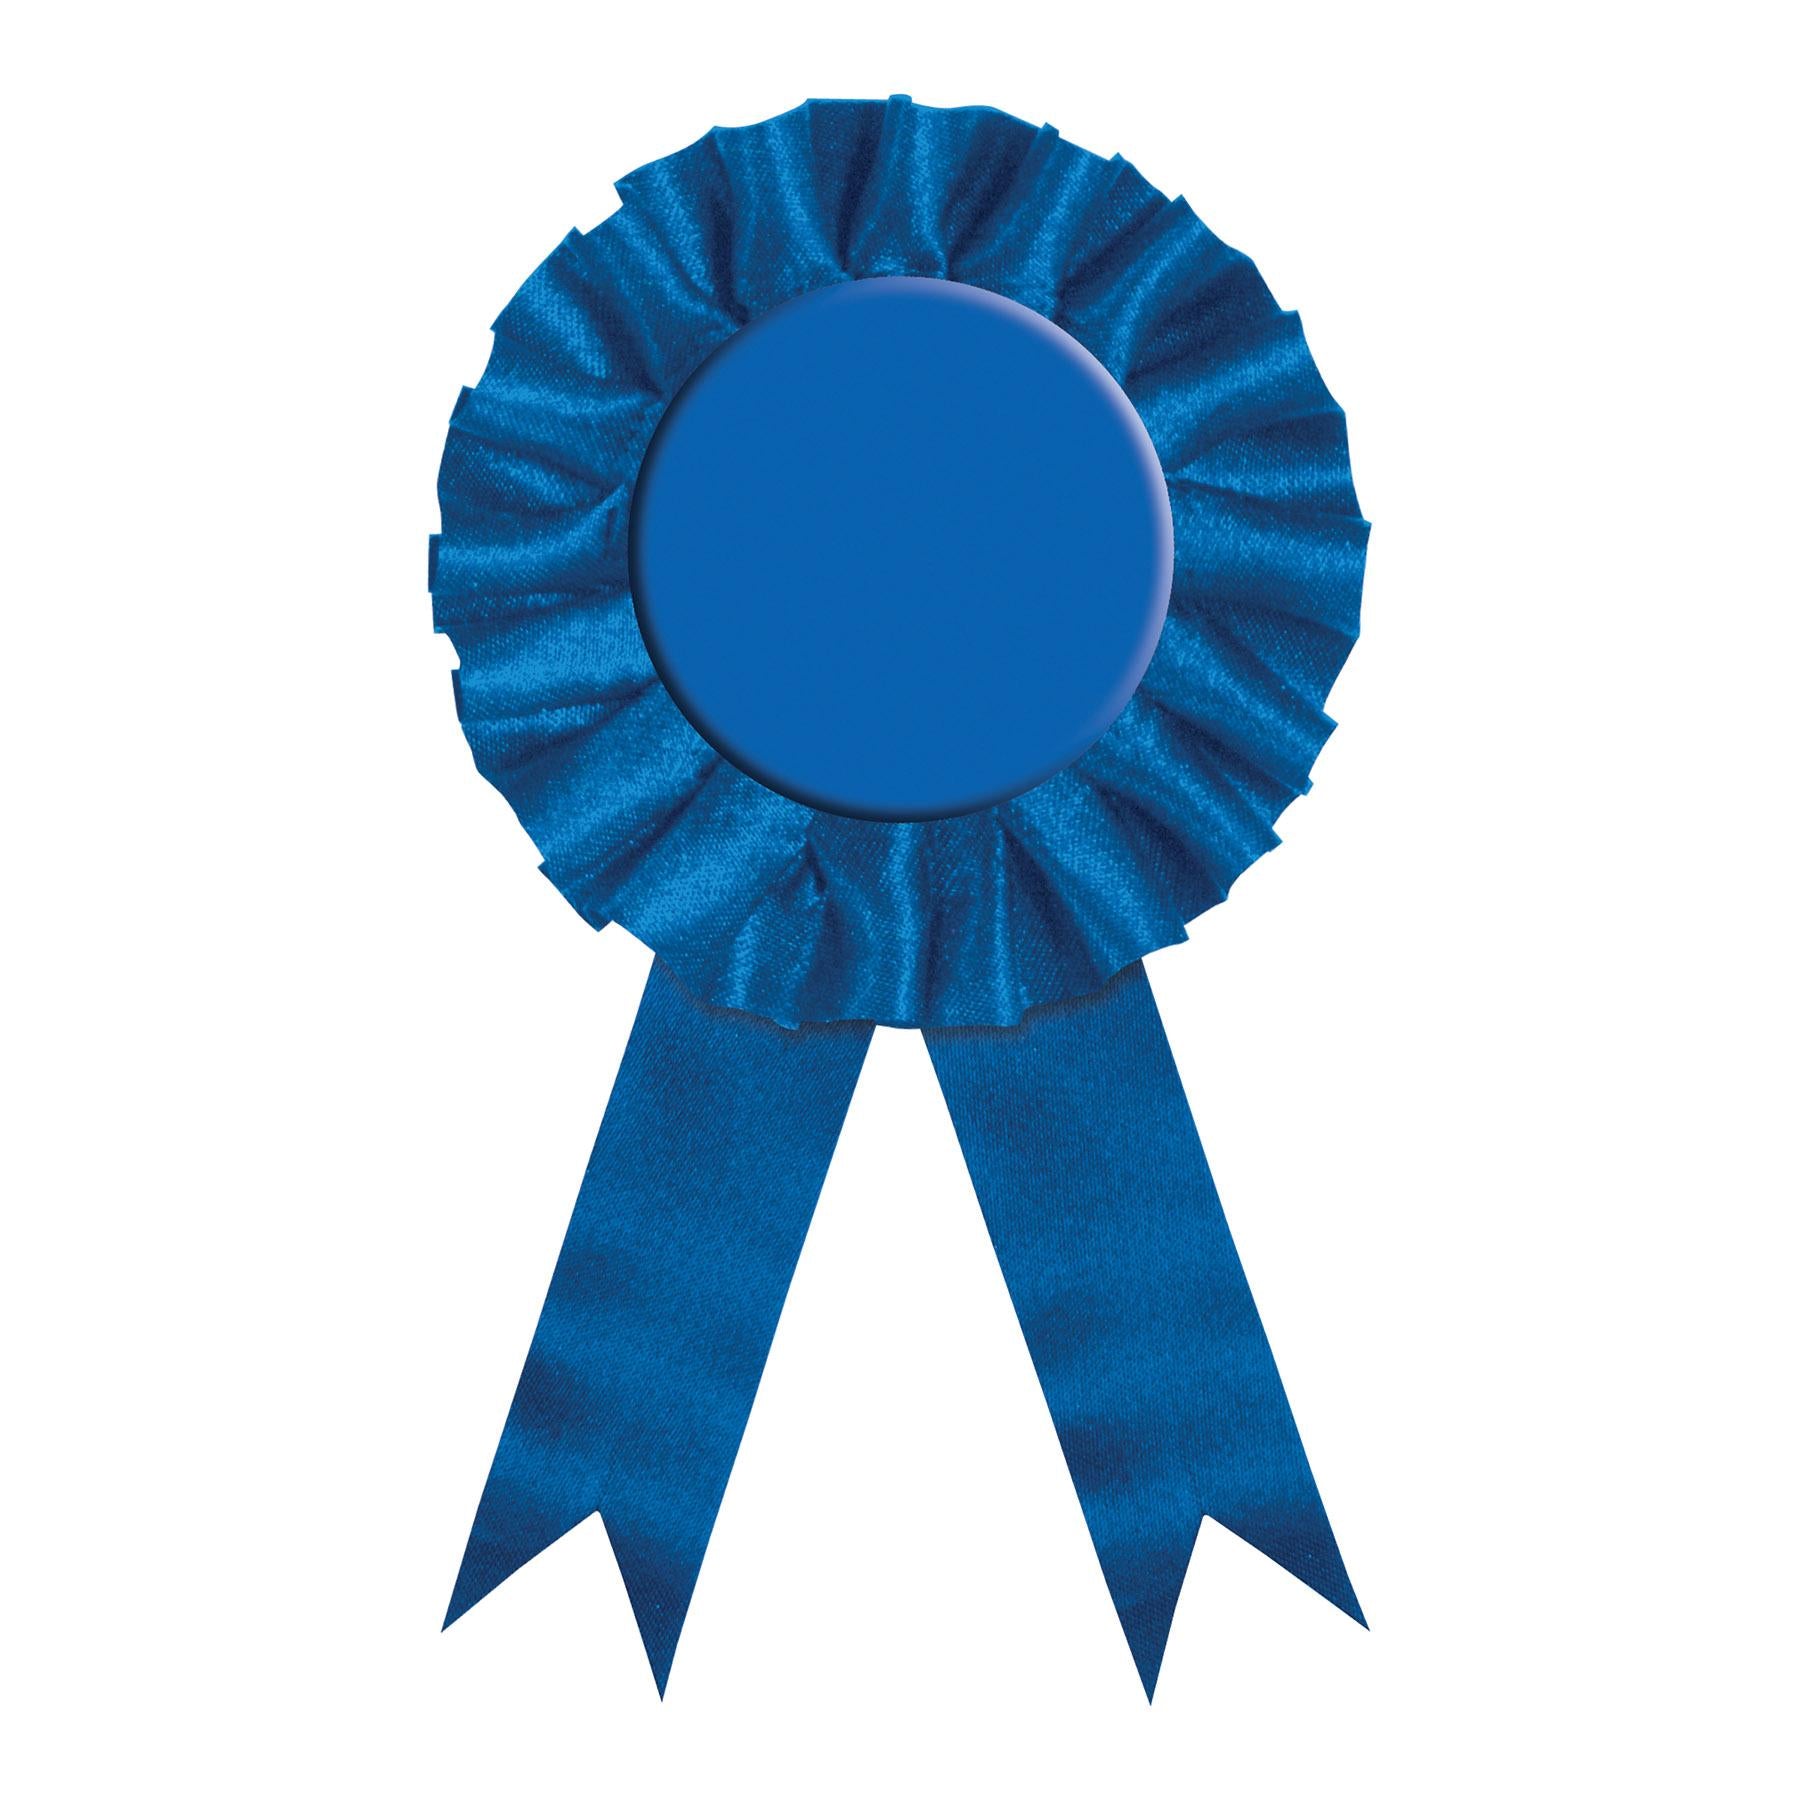 Award Party Ribbon - blue